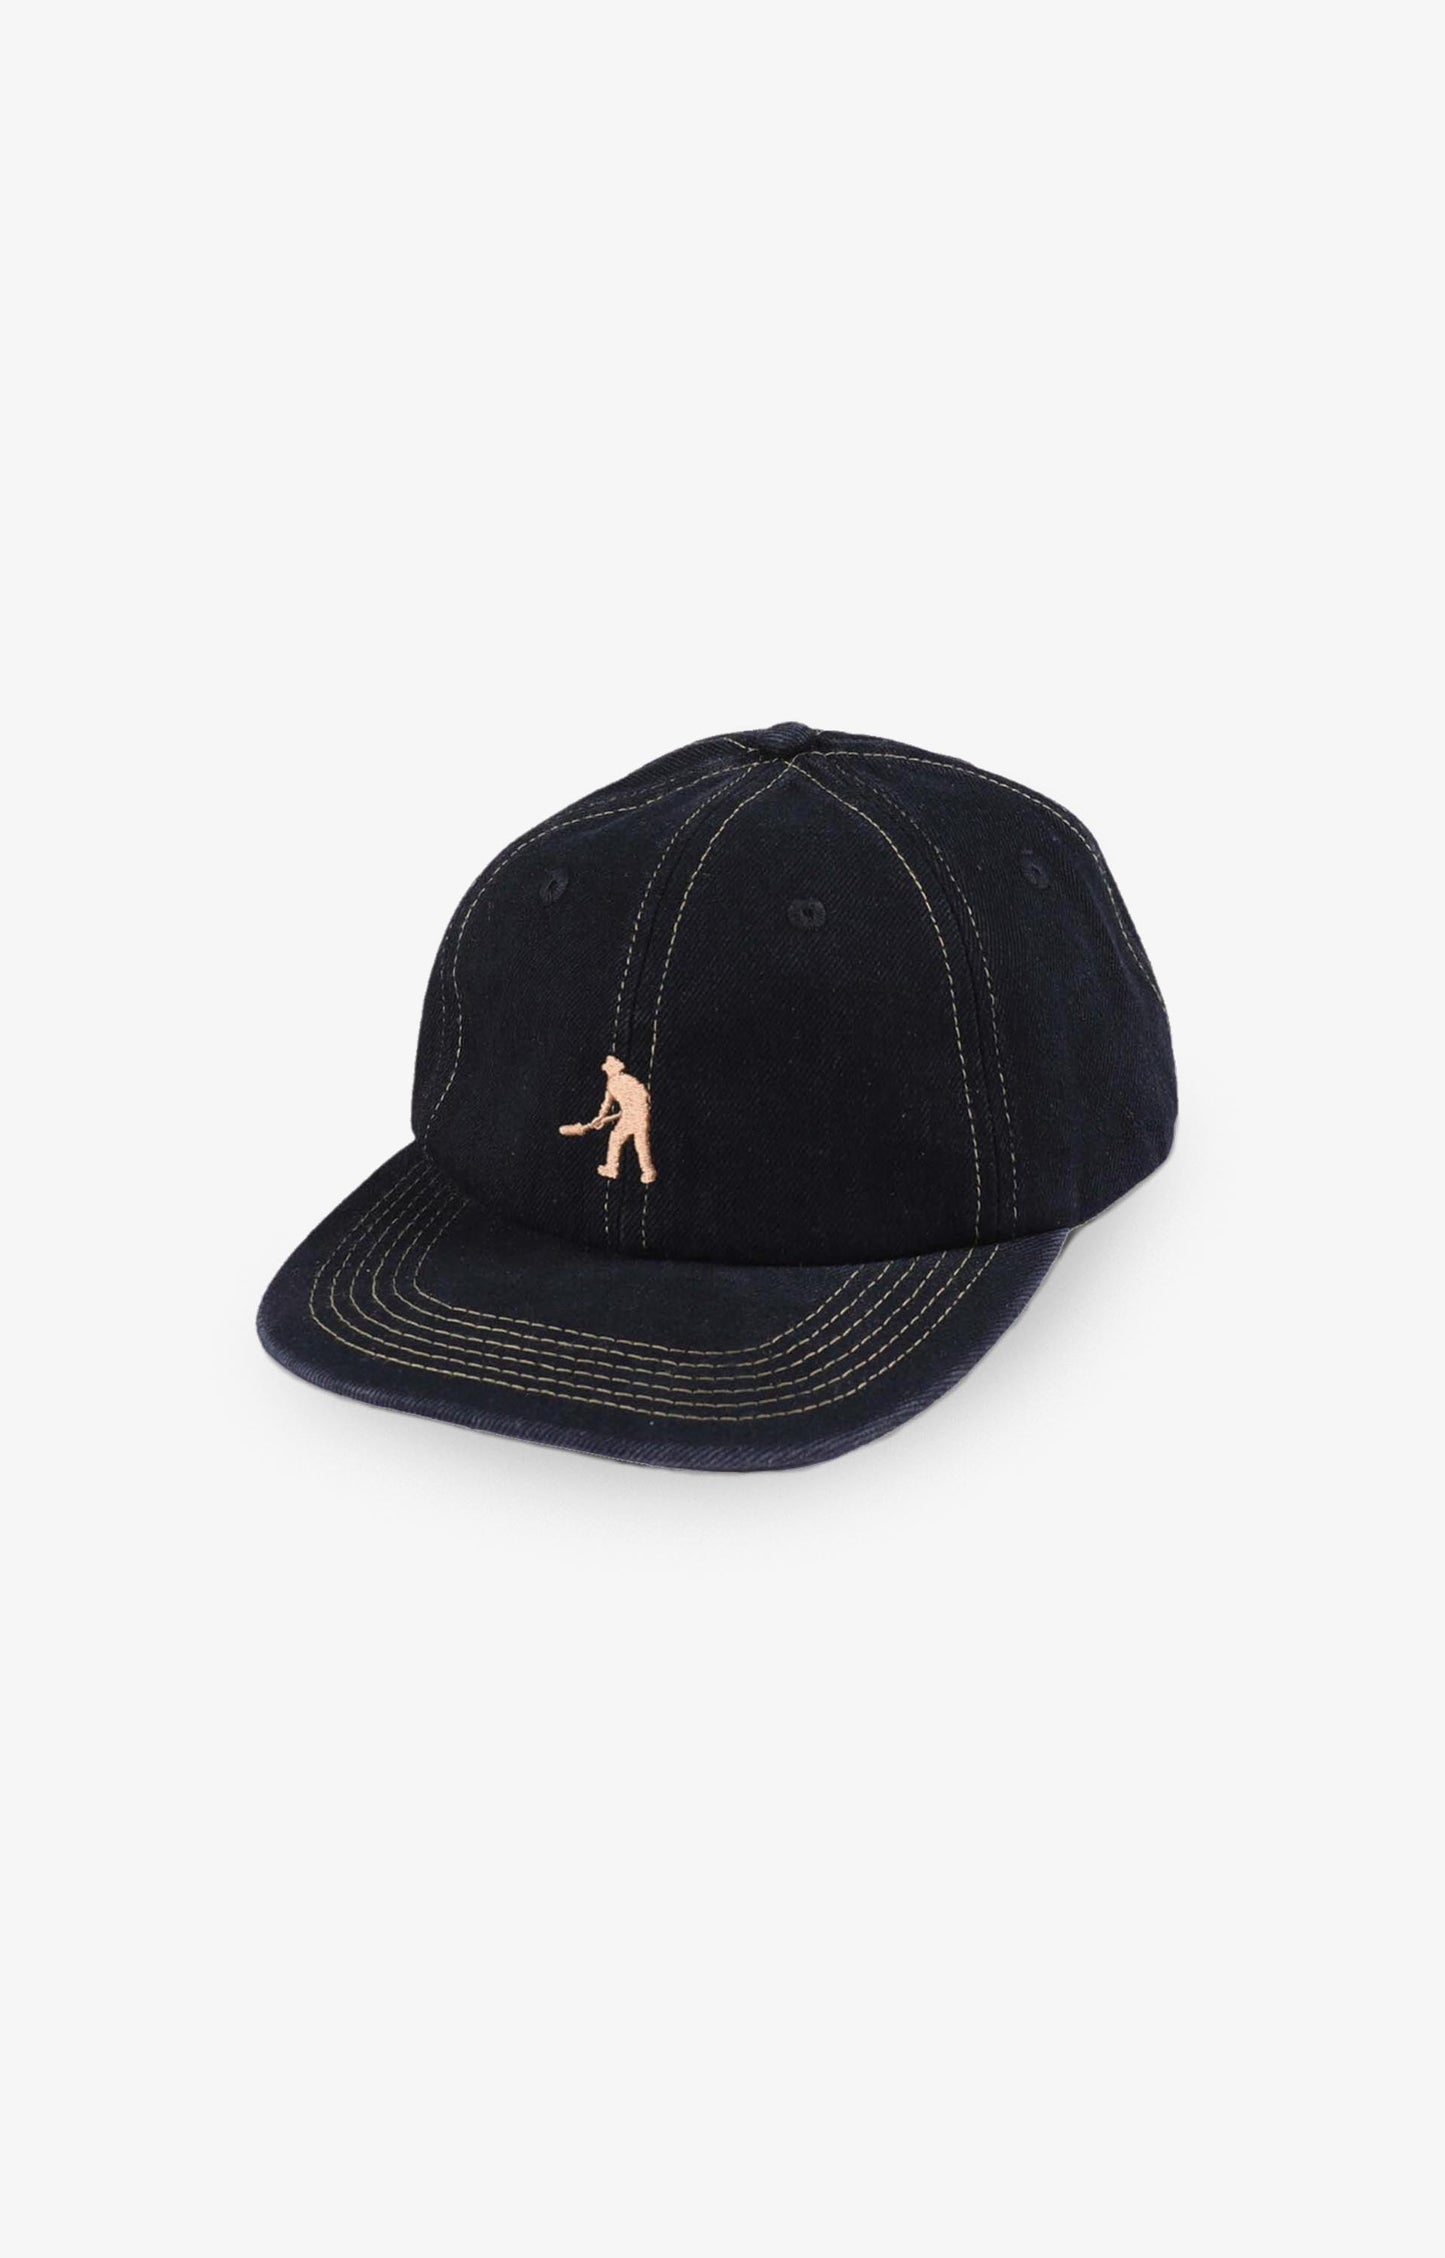 Pass~Port Workers Club Denim Cap Headwear, Black